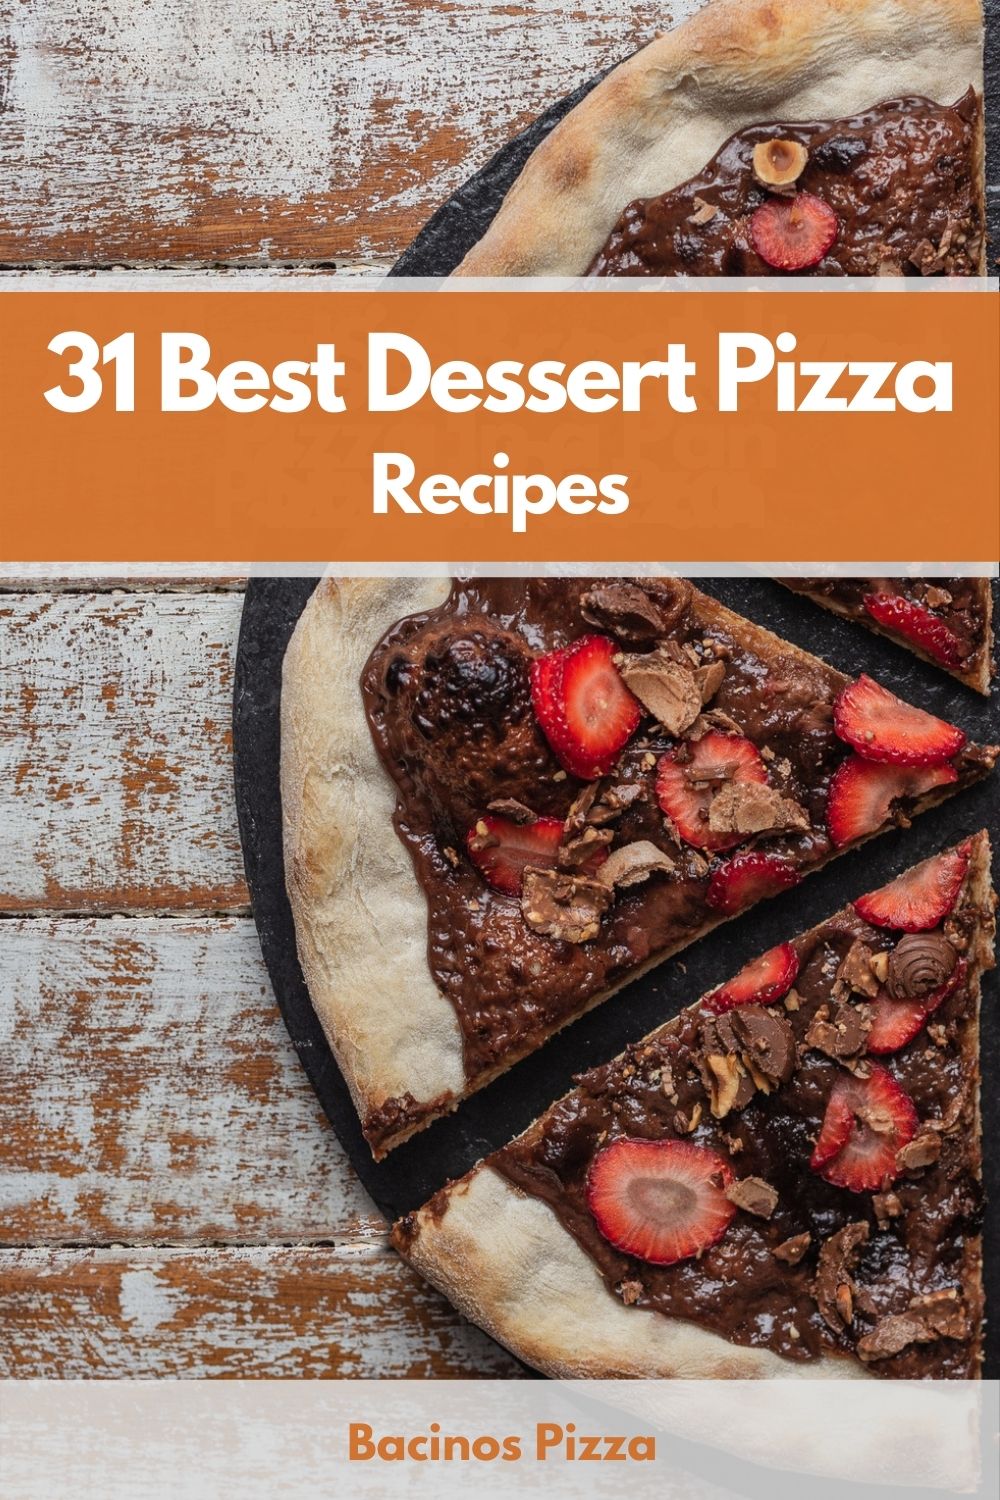 31 Best Dessert Pizza Recipes pin